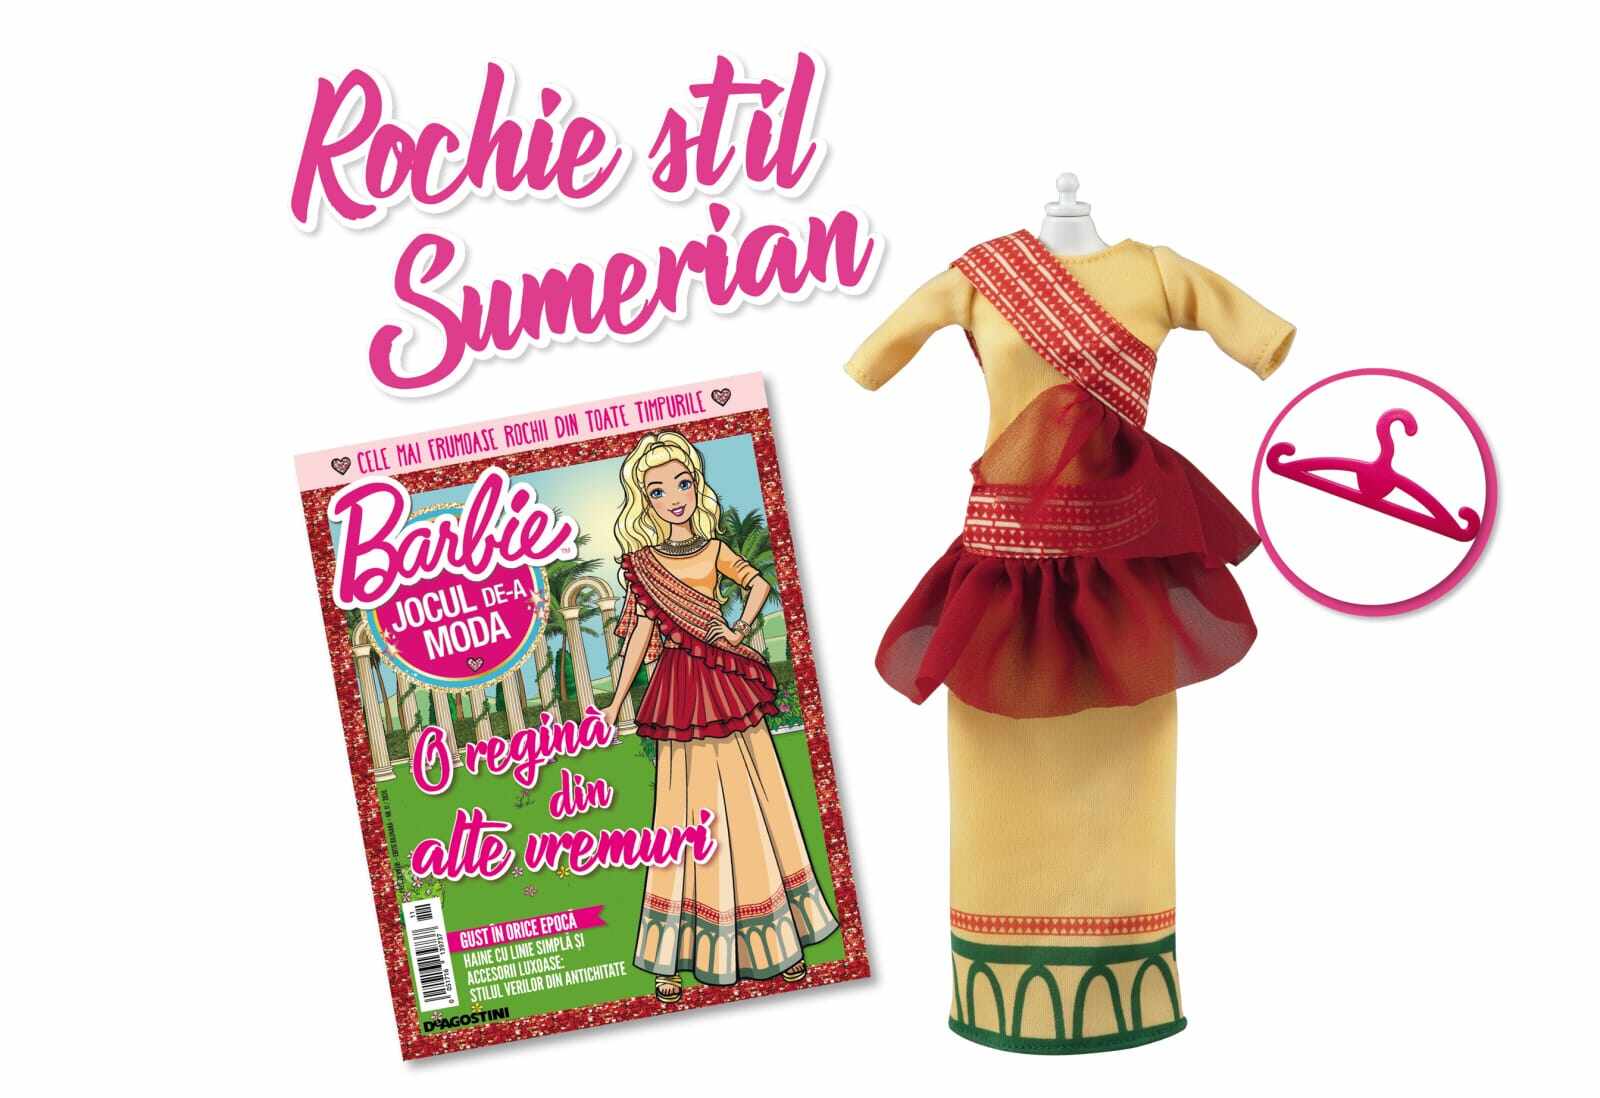 Colectia Barbie Jocul de-a Moda - Nr. 11 - Rochie stil sumerian, DeAgostini, 2-3 ani +